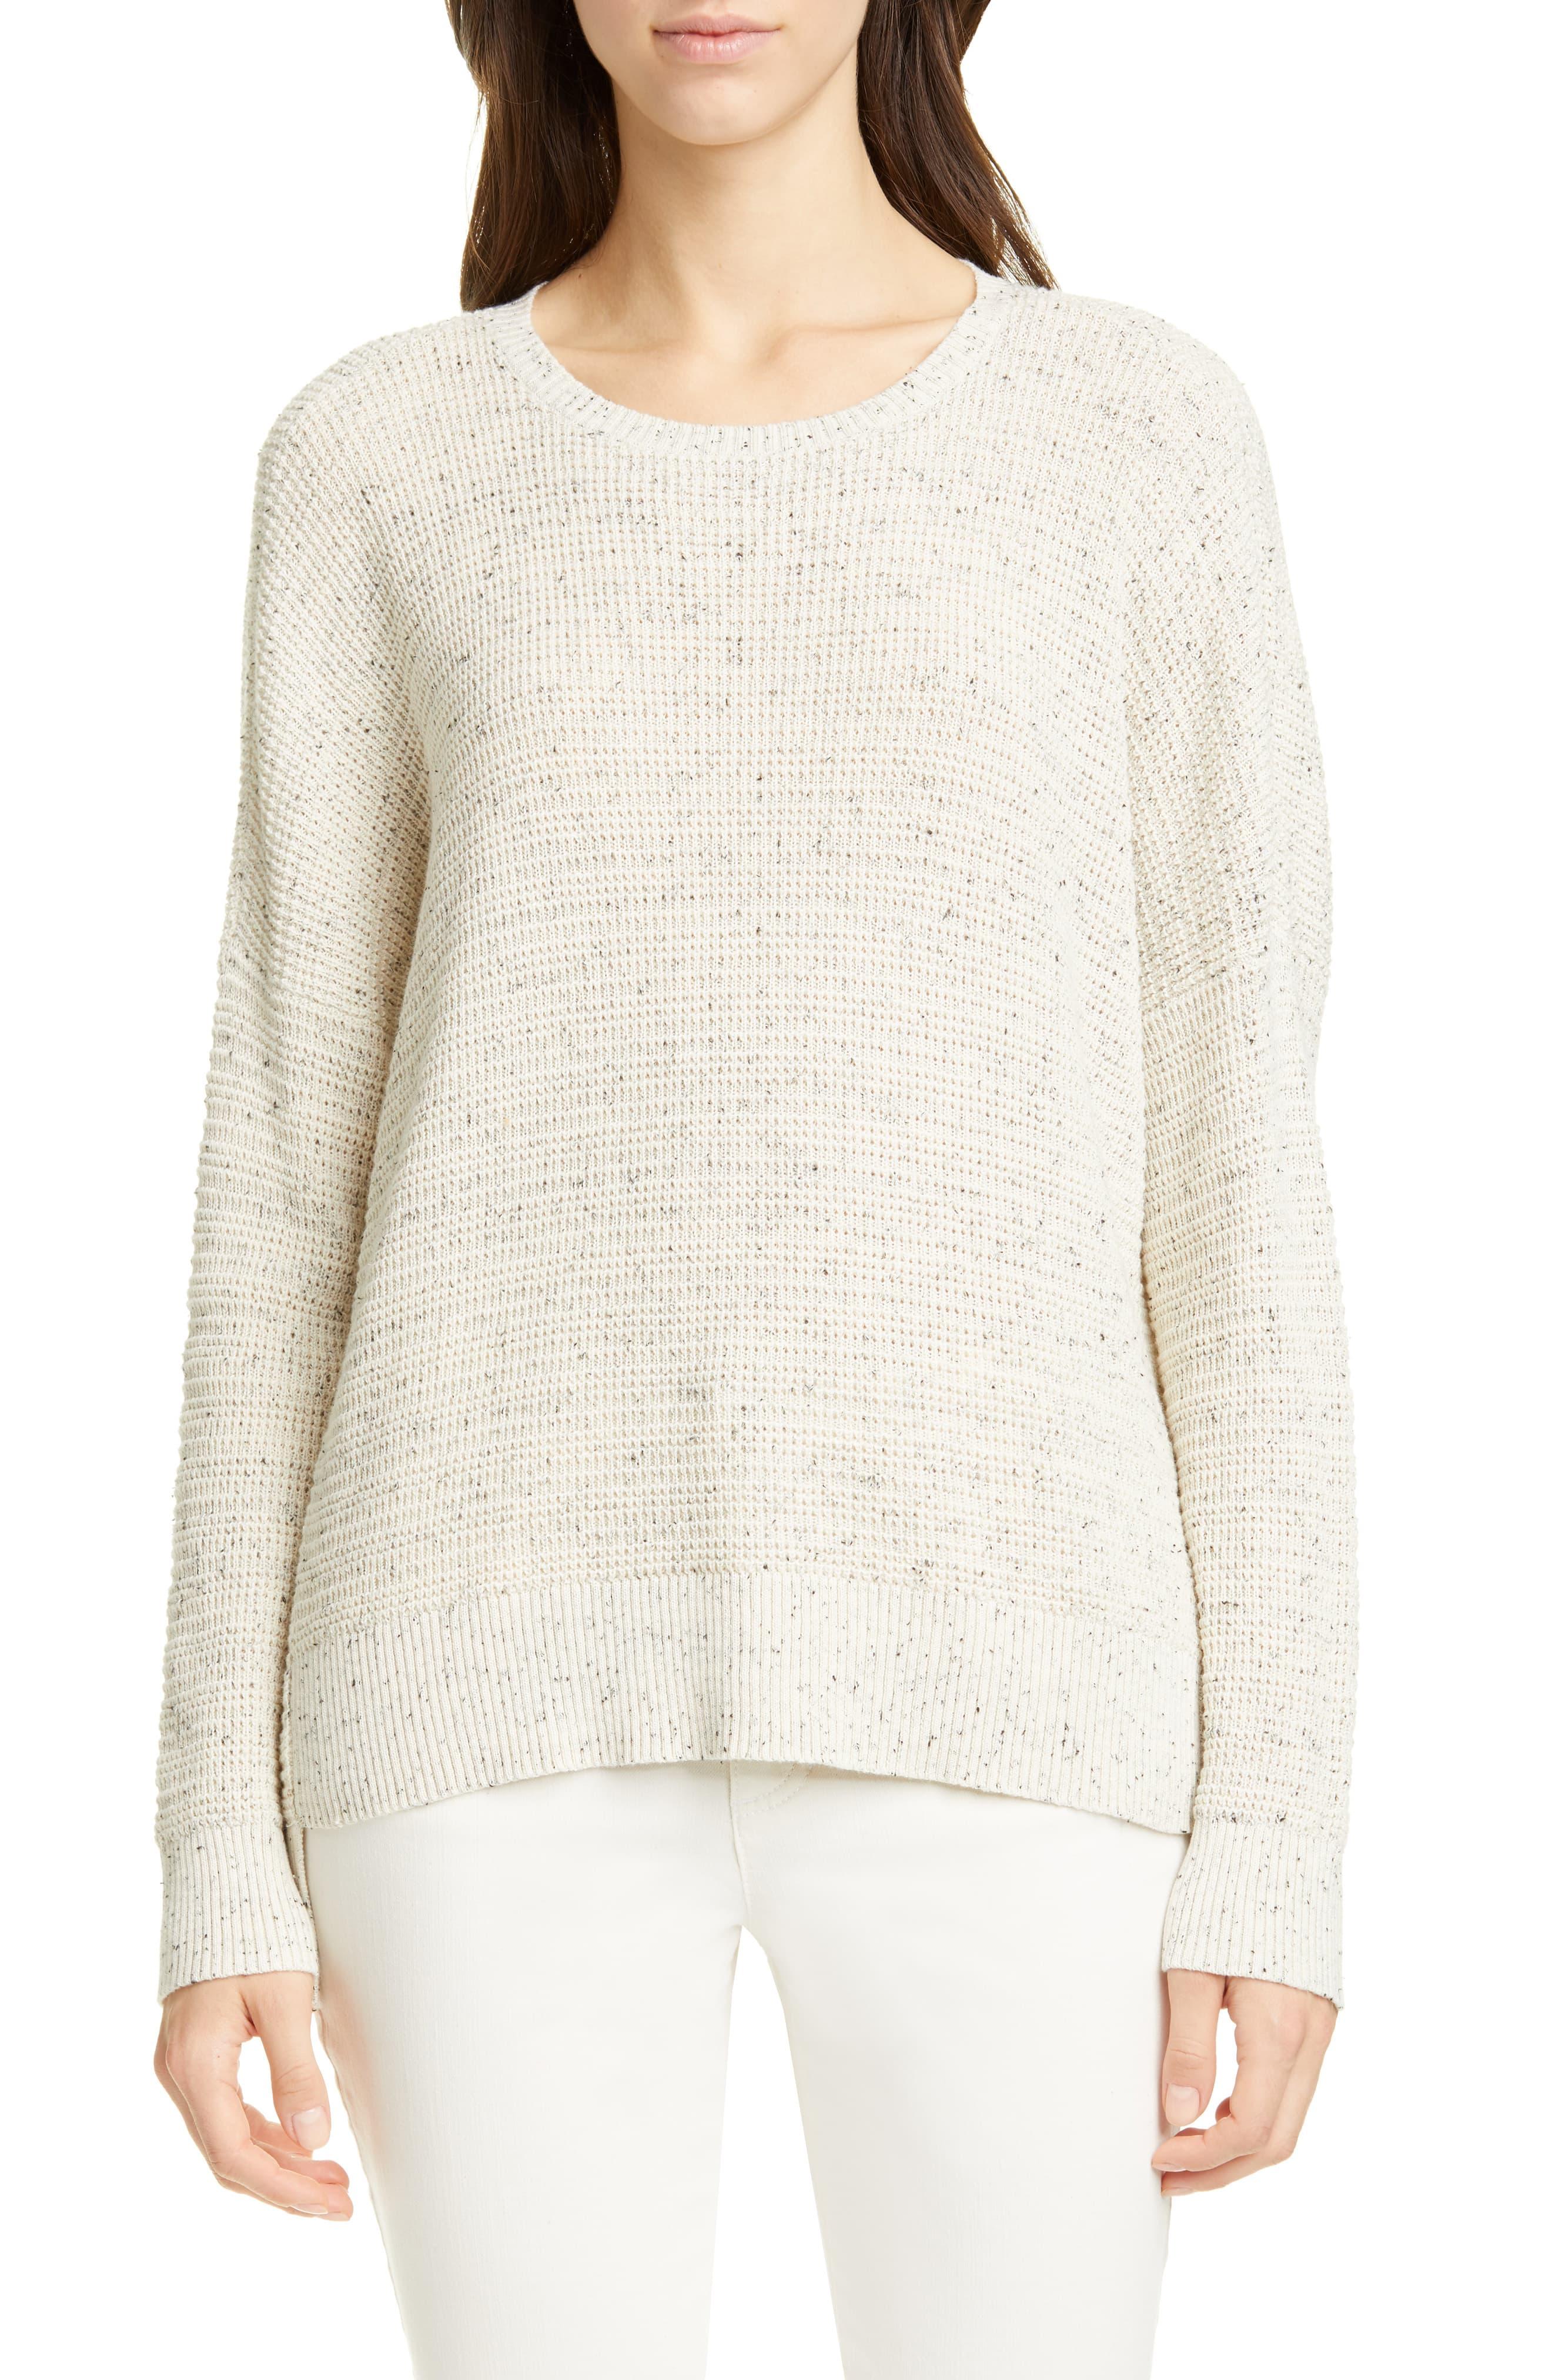 Eileen Fisher Organic Cotton Blend Sweater in Ecru (Natural) - Lyst